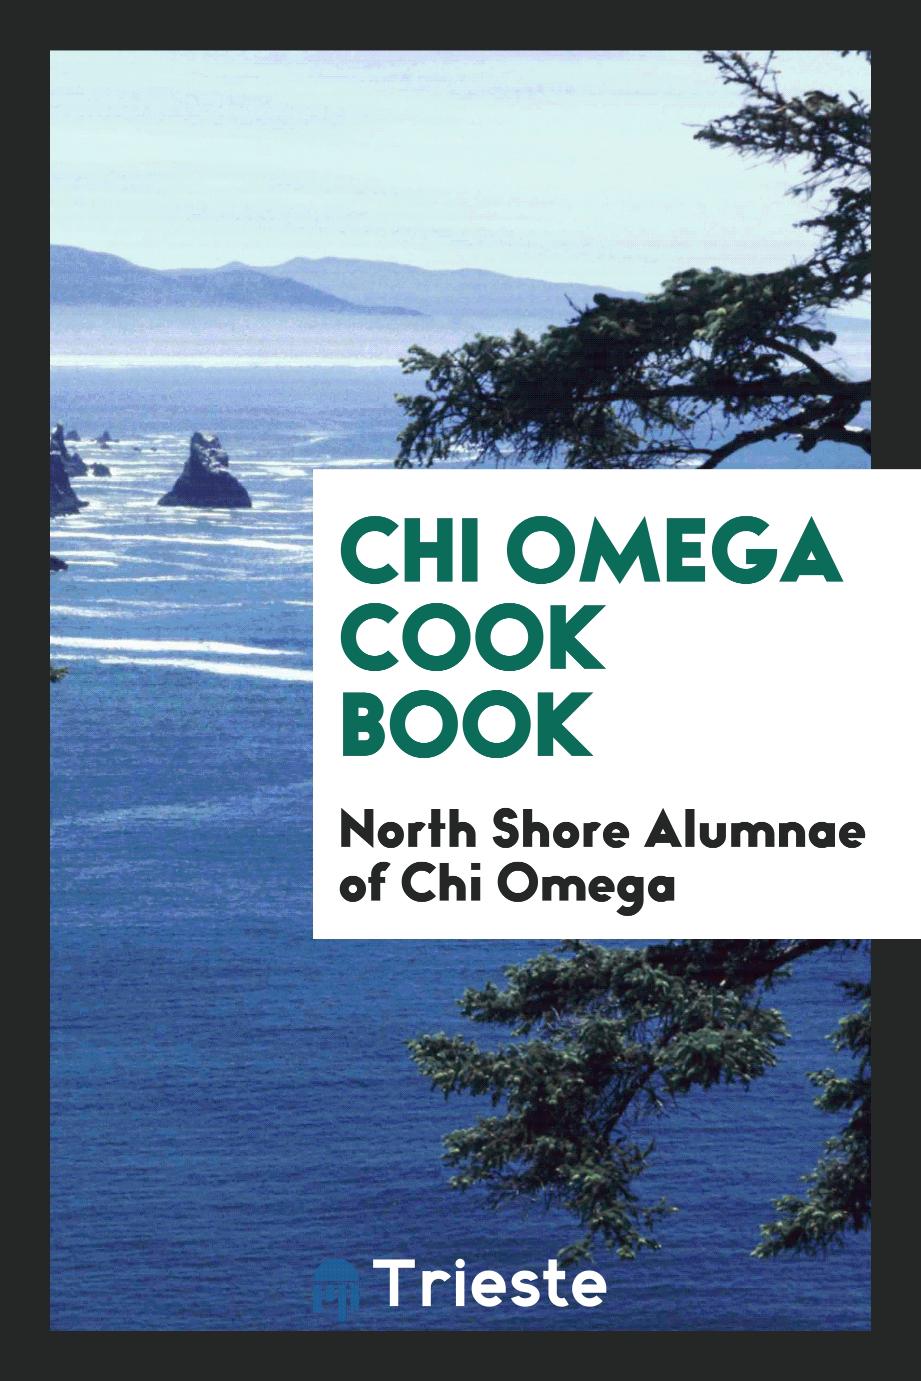 North Shore Alumnae of Chi Omega - Chi Omega cook book